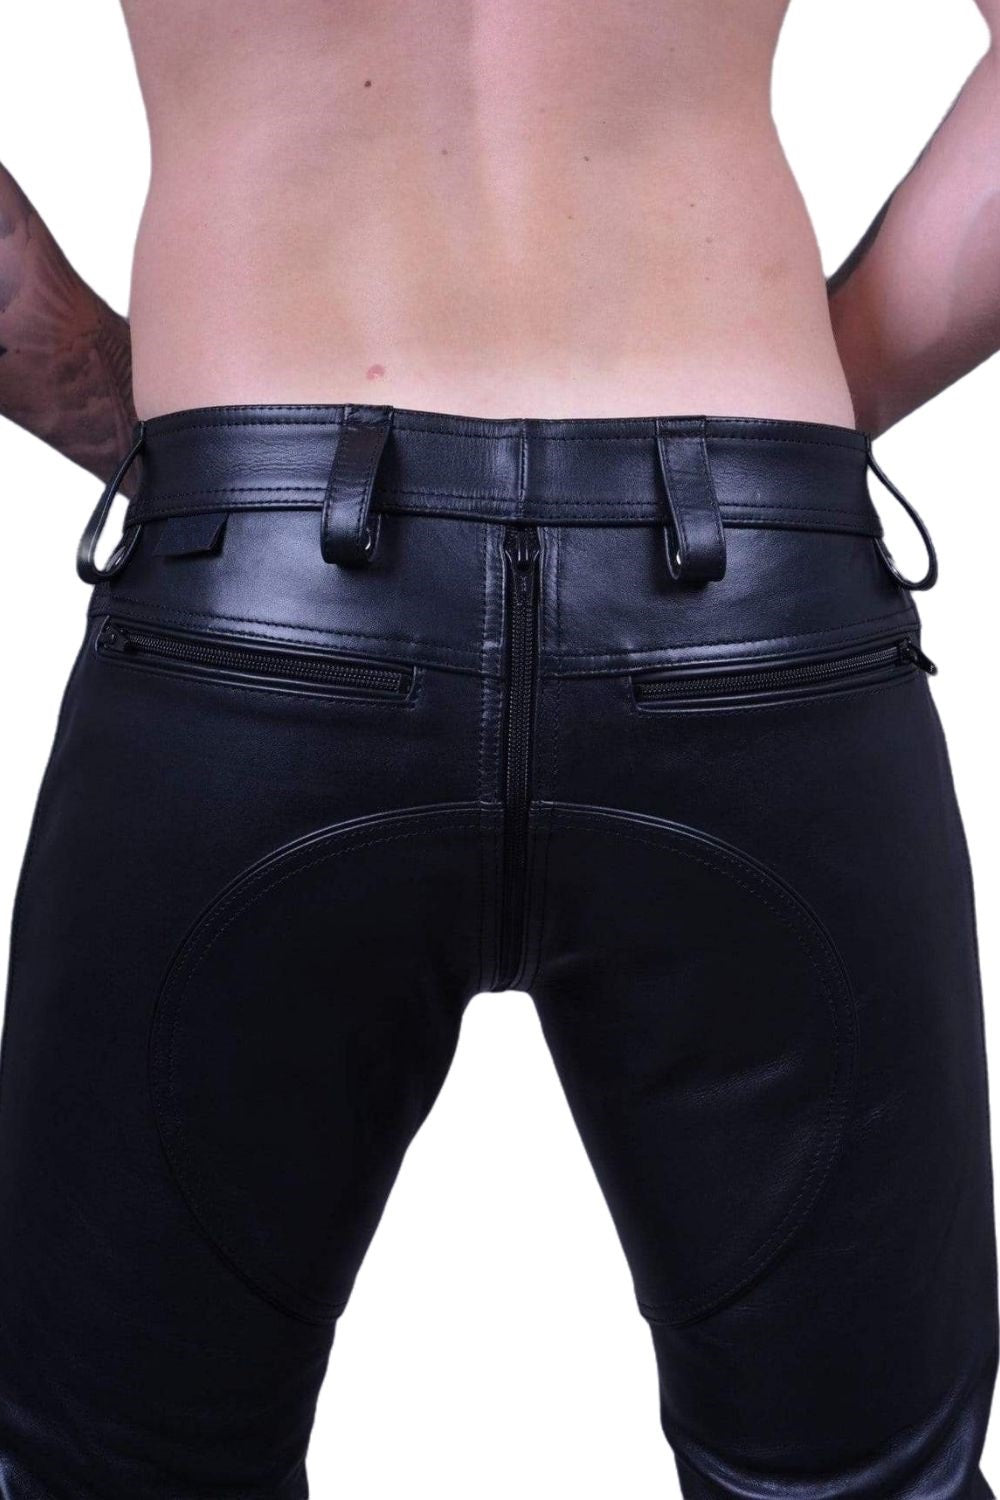 Mens Leather Hot Pants - Mr Leather Shop